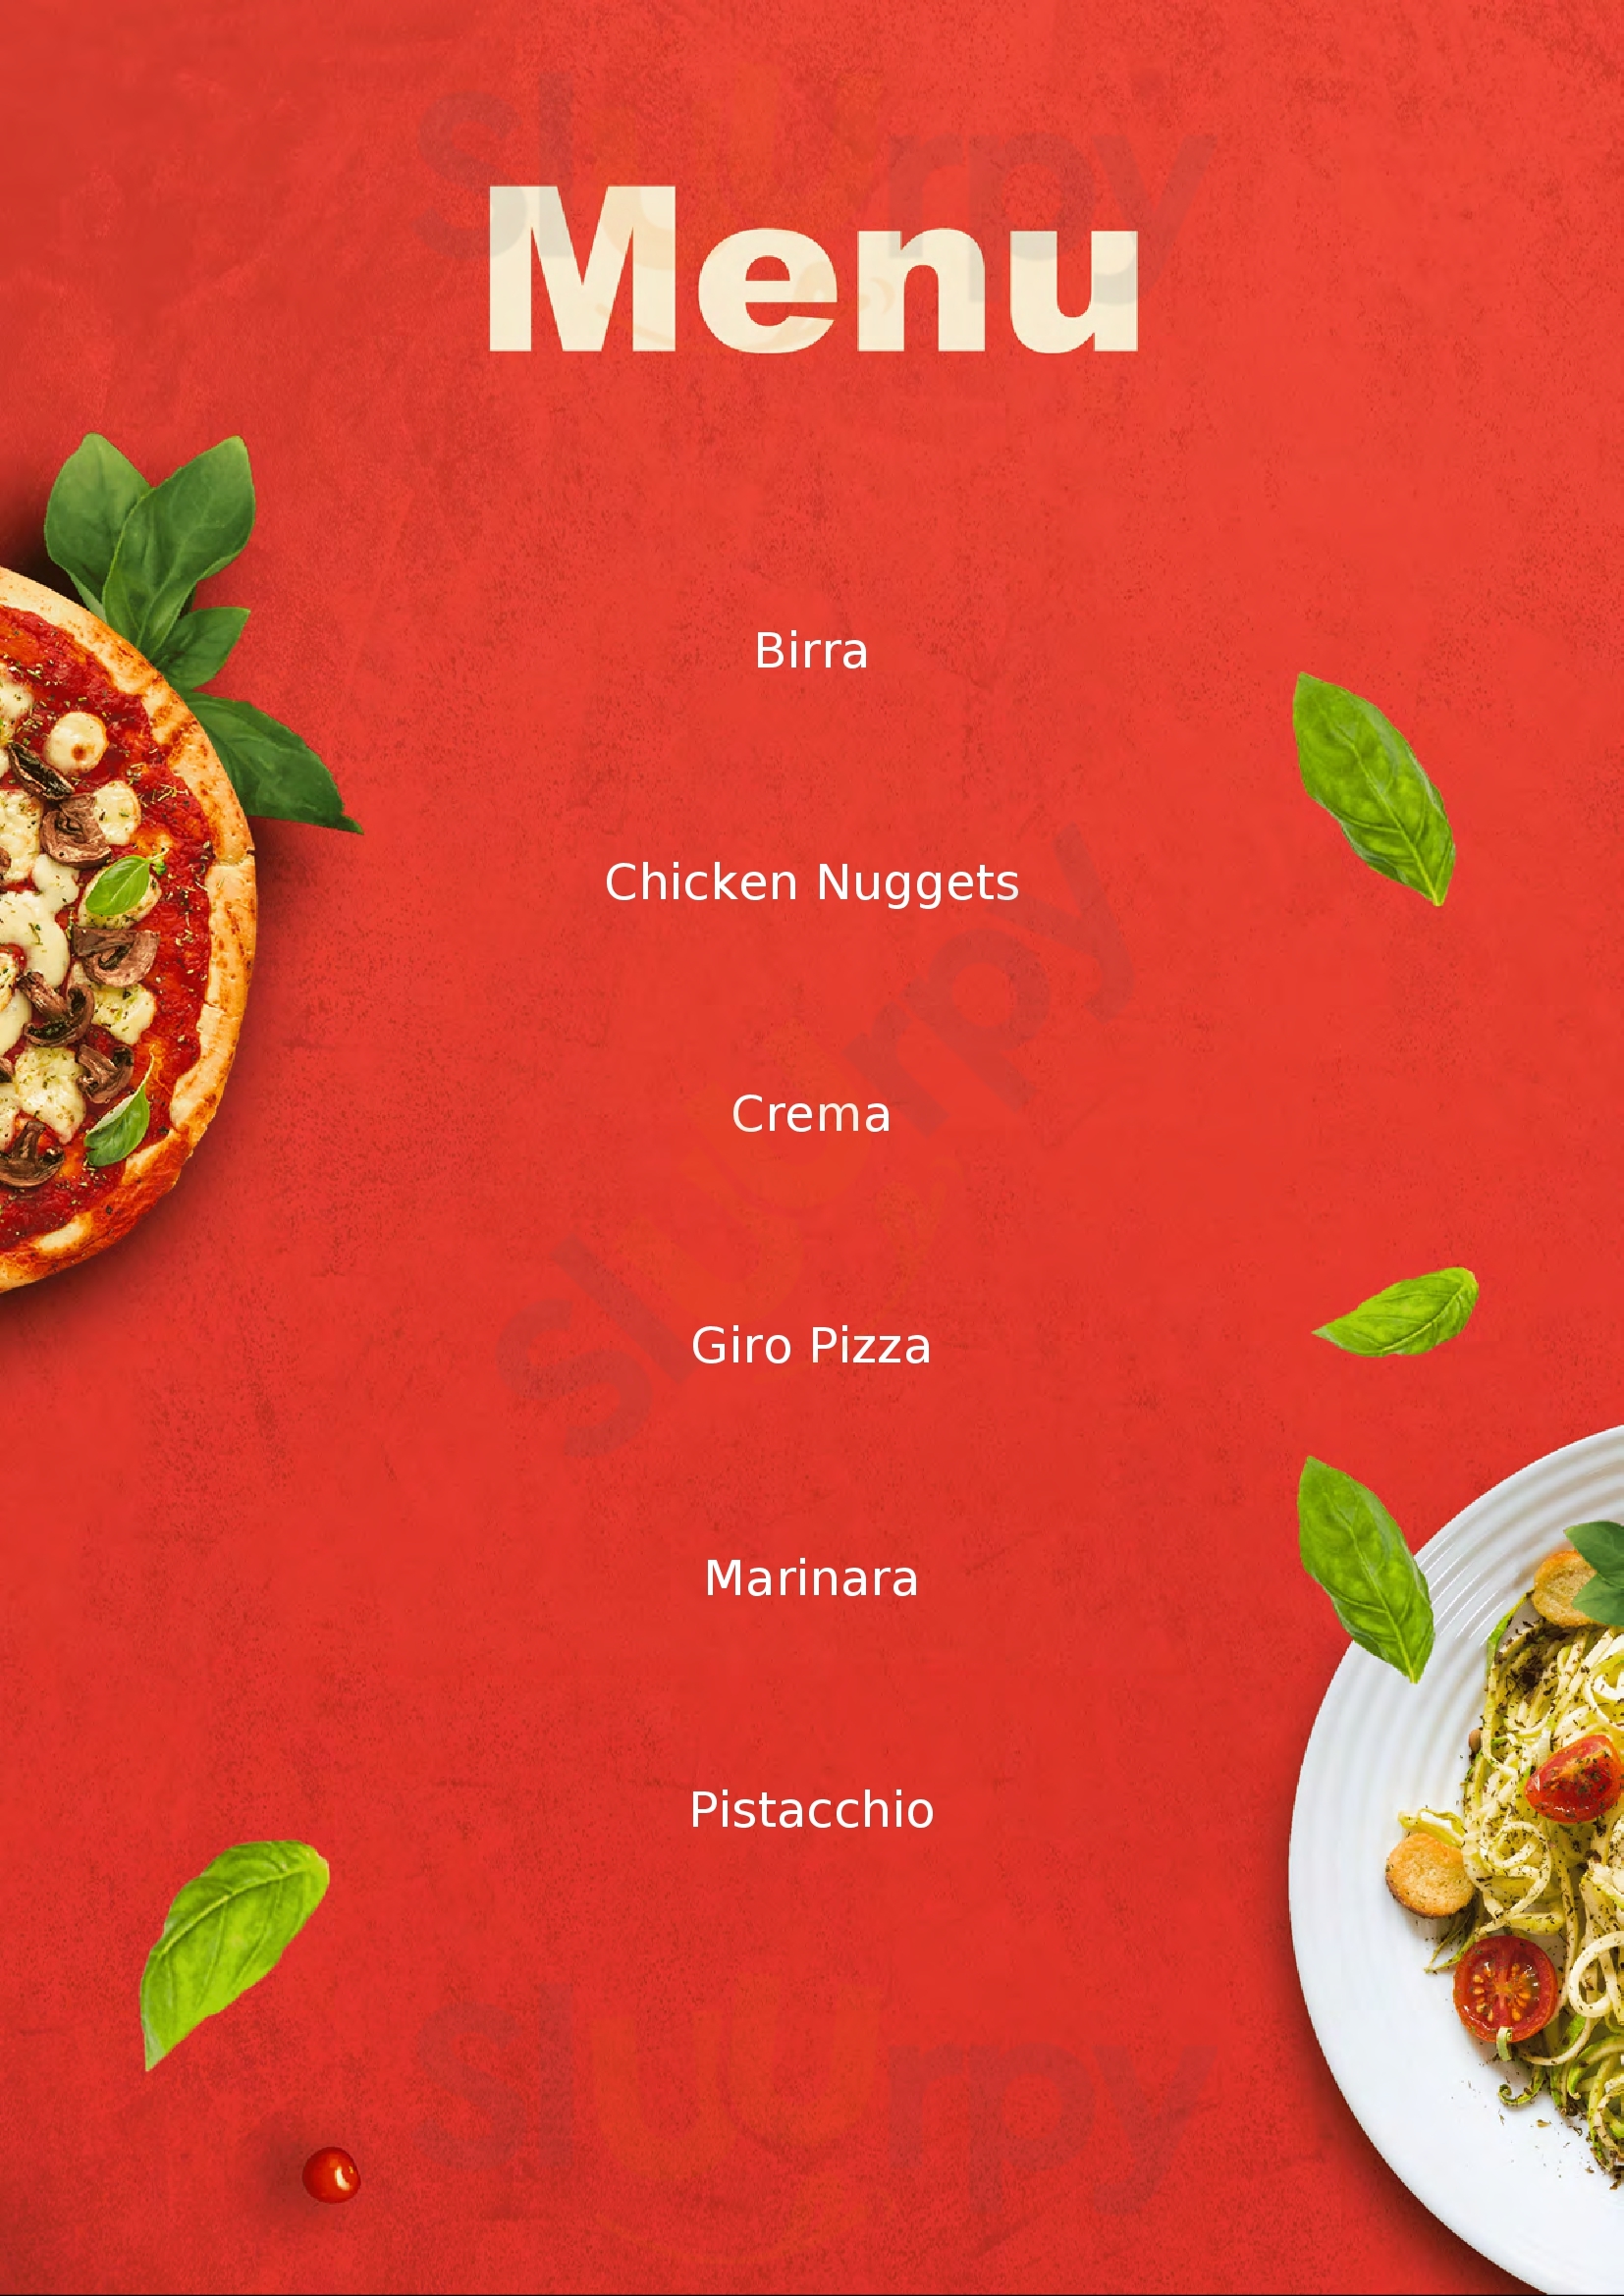 Pizzaclub No Limits Novara menù 1 pagina